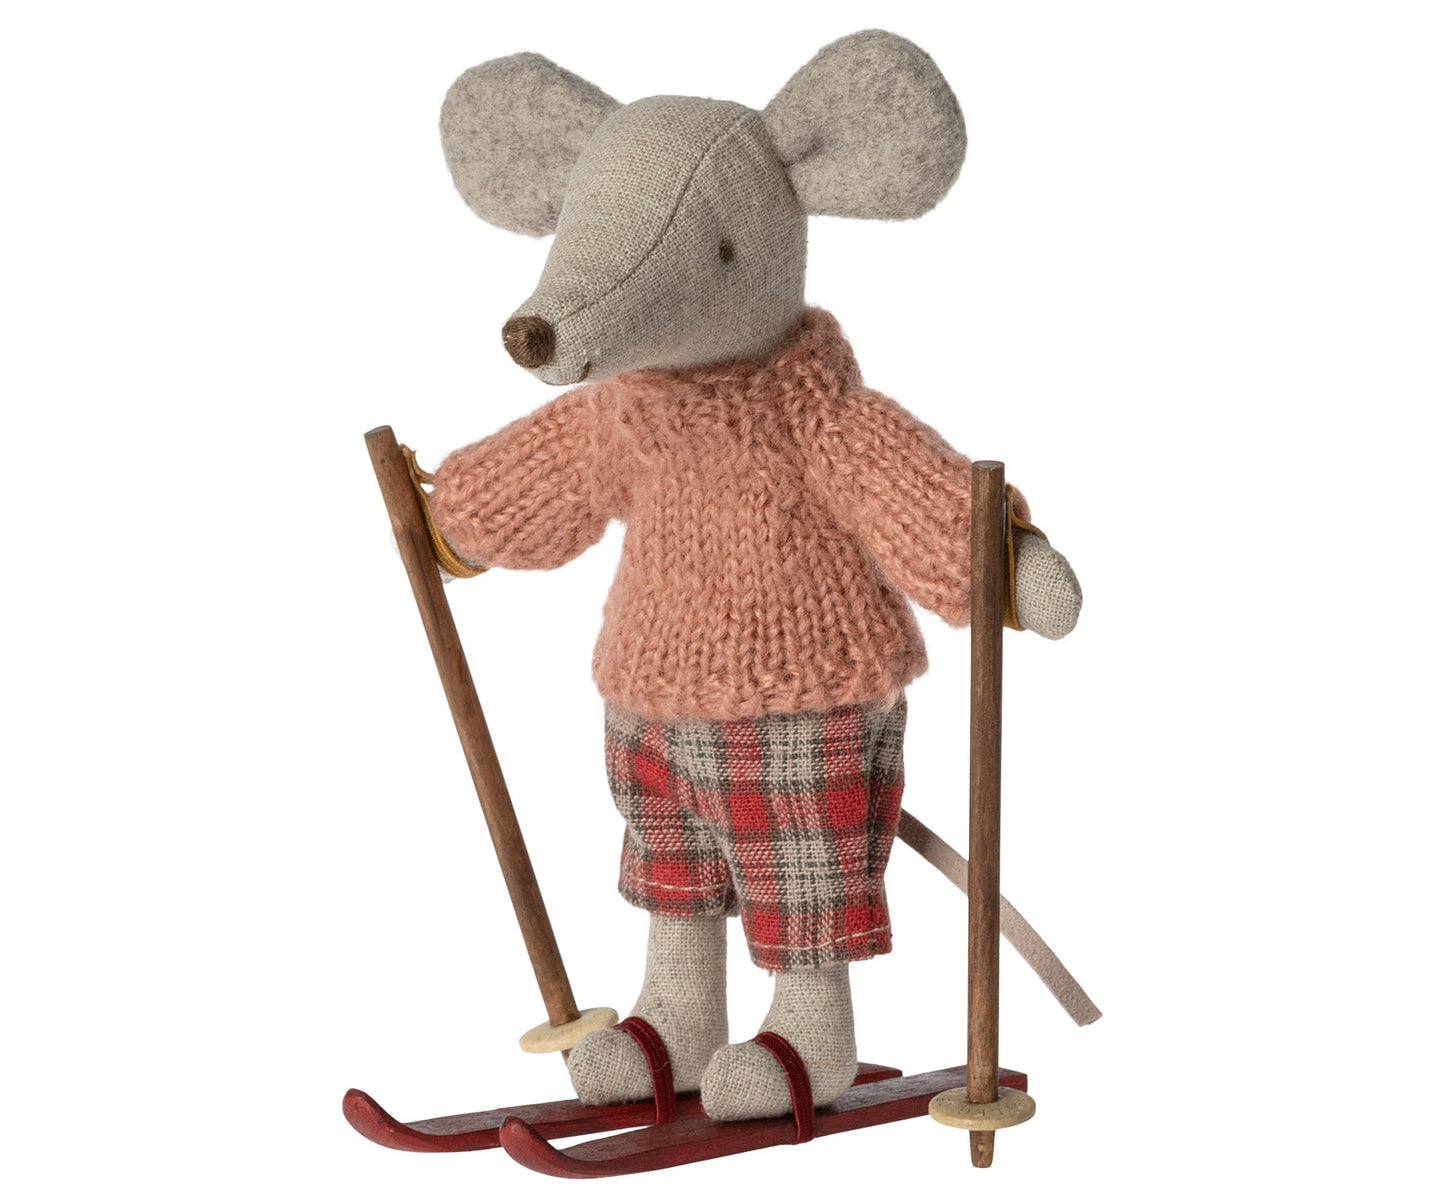 Winter mouse with ski set, Big sister